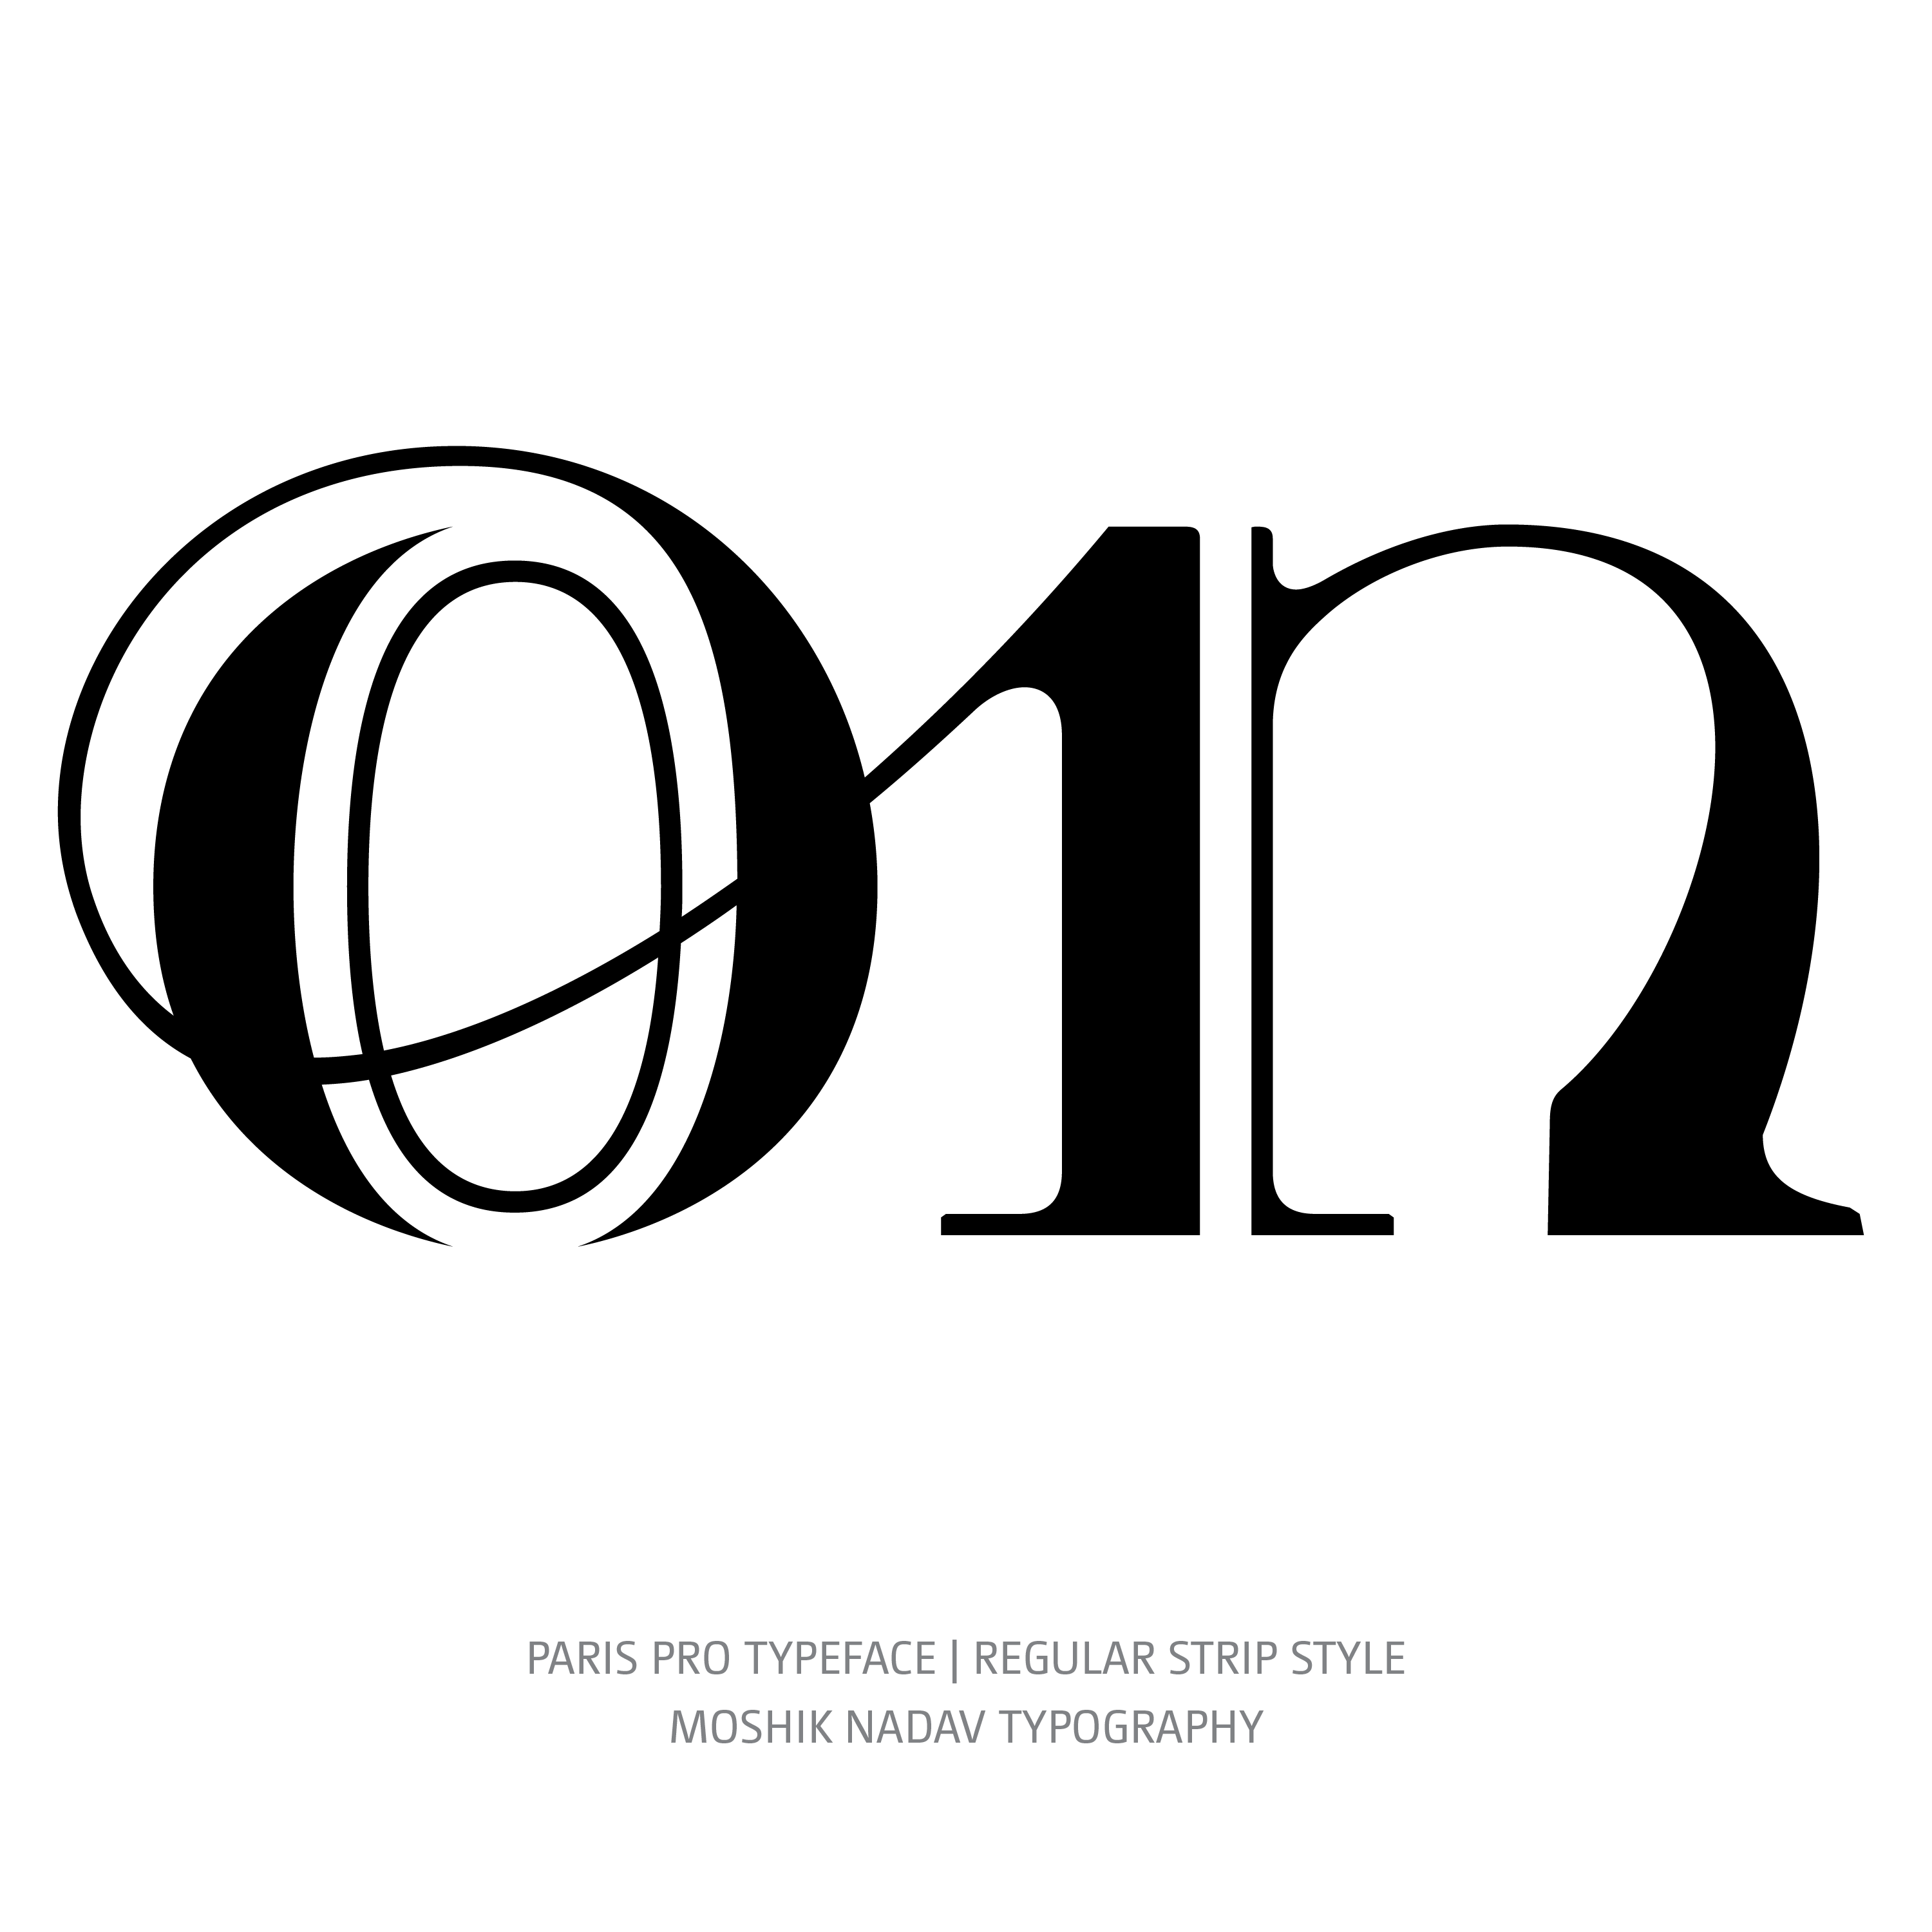 Paris Pro Typeface Regular Strip on alternative ligature